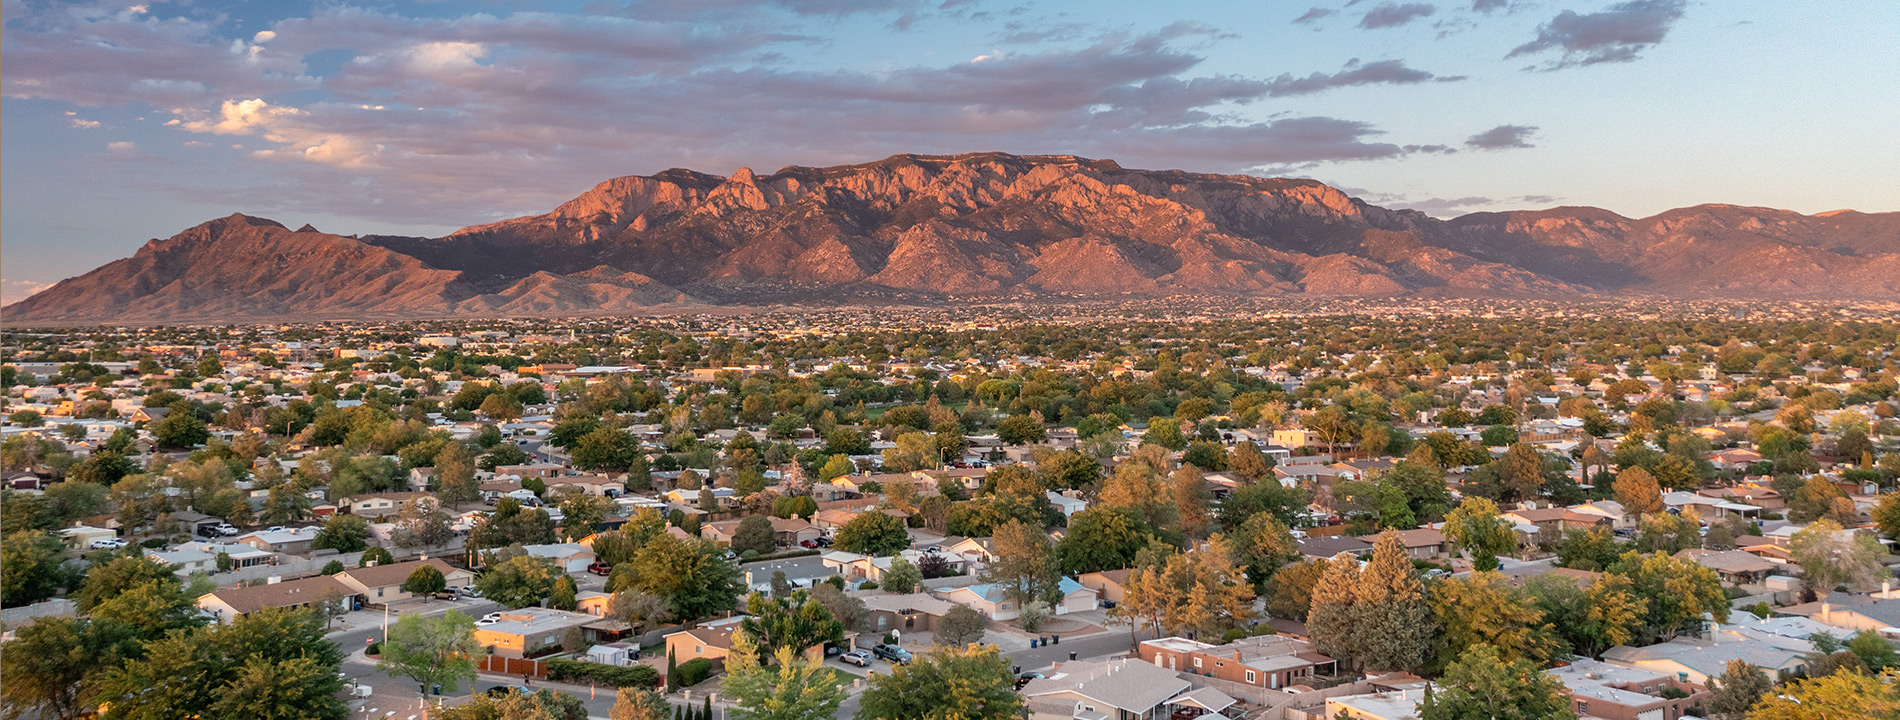 View of mountains in New Mexico, Albuquerque.